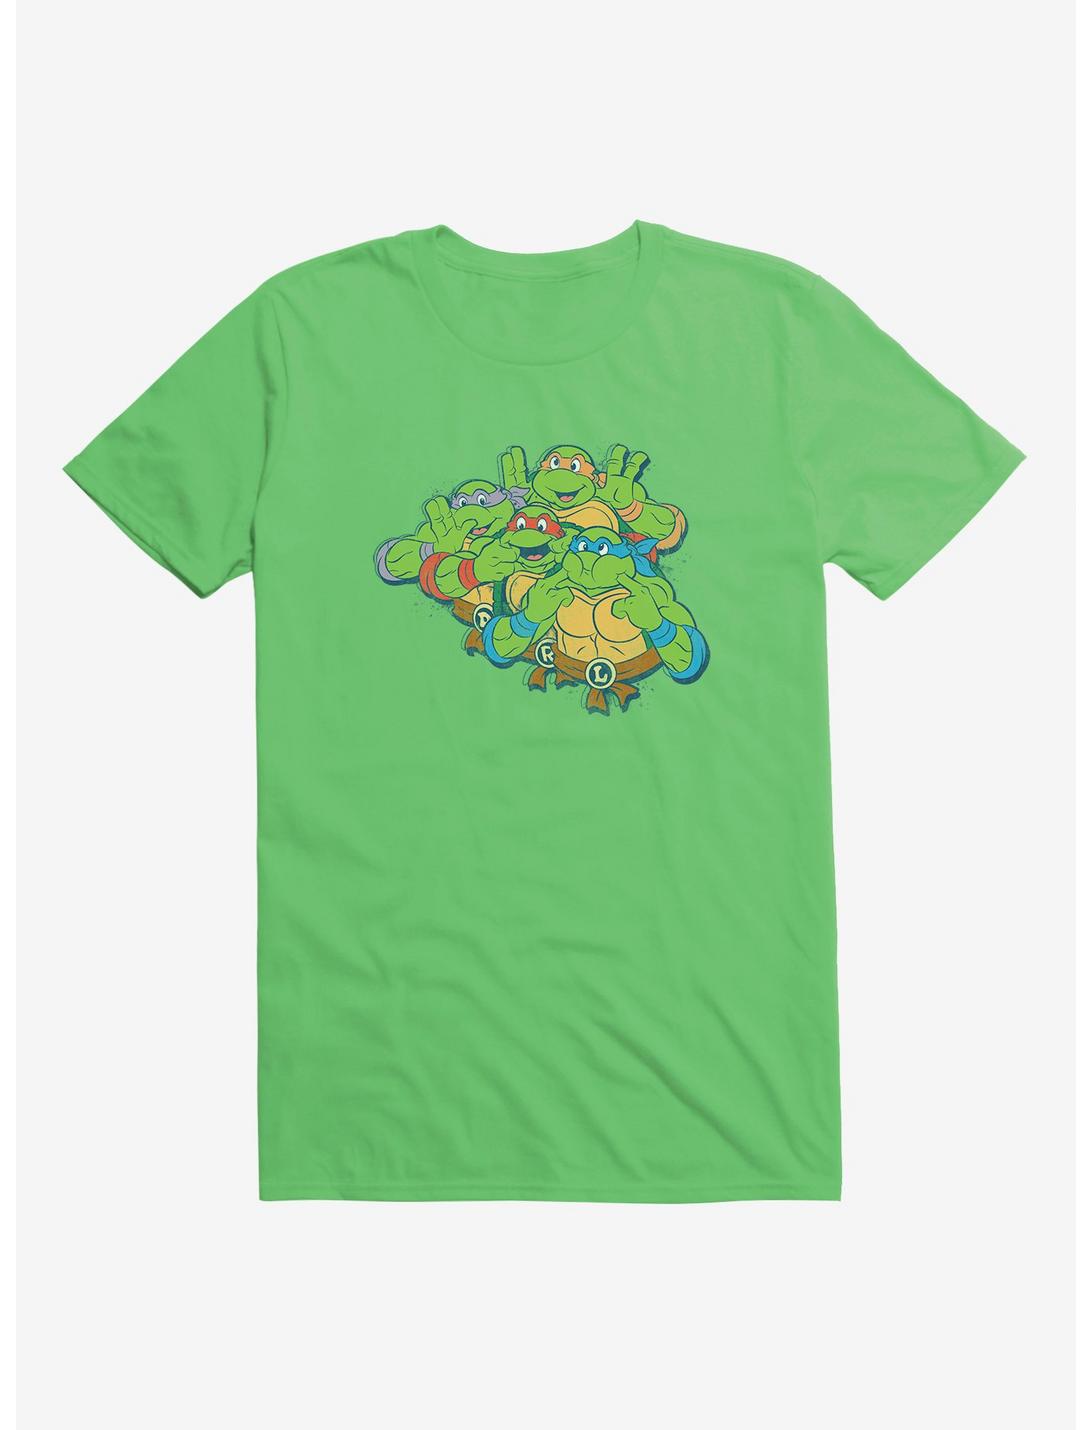 Teenage Mutant Ninja Turtles Group Making Faces T-Shirt, KELLY GREEN, hi-res